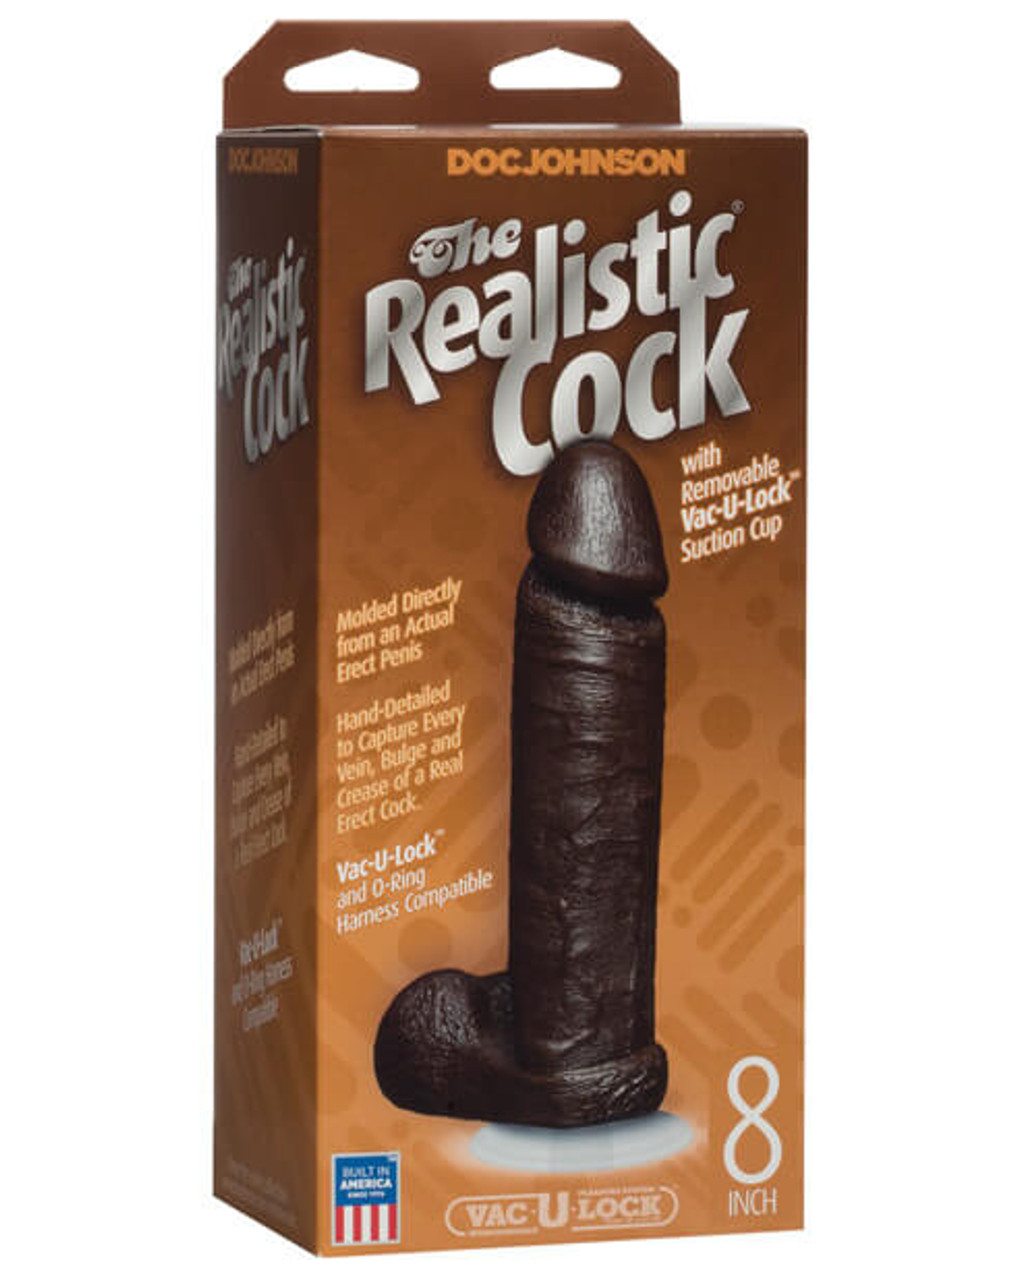 denise heintz recommends 8 inch black cock pic